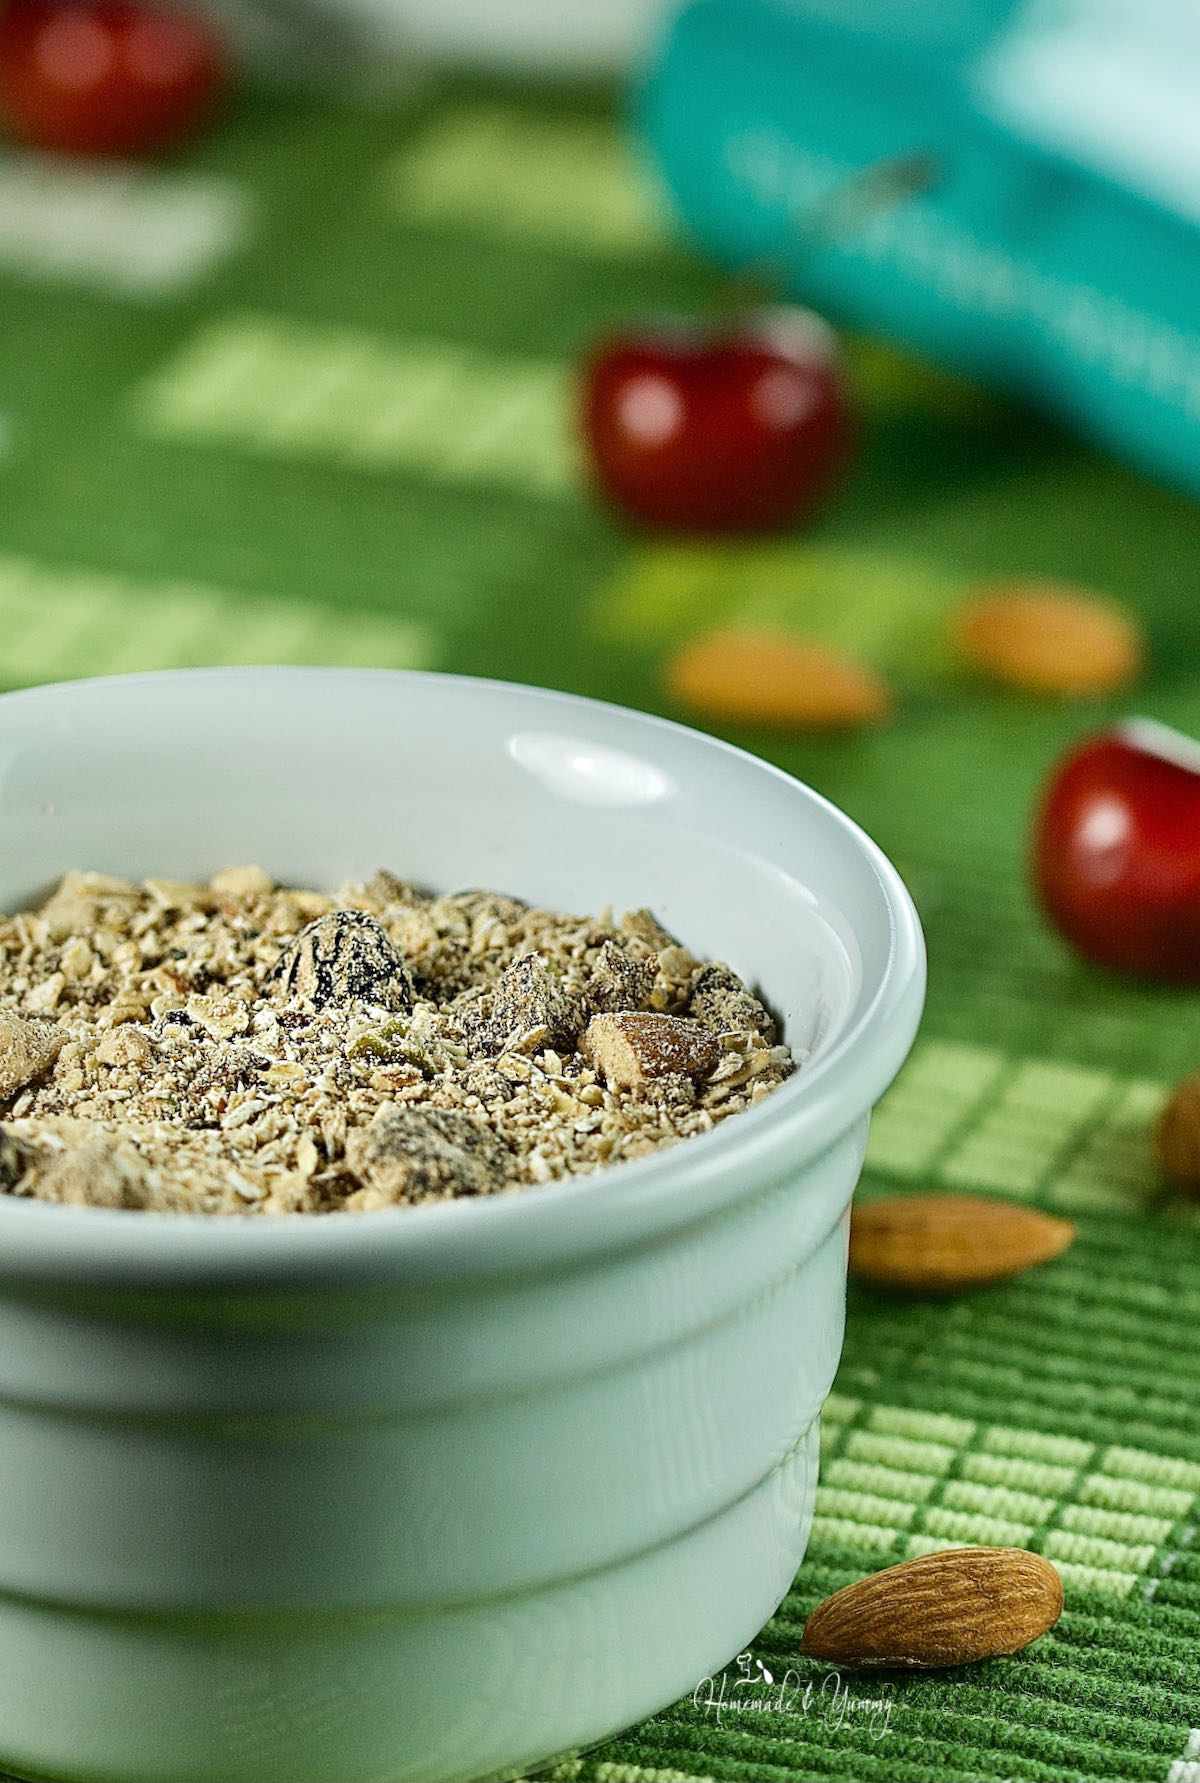 Homemade granola with nuts, seeds, chocolate and coffee.